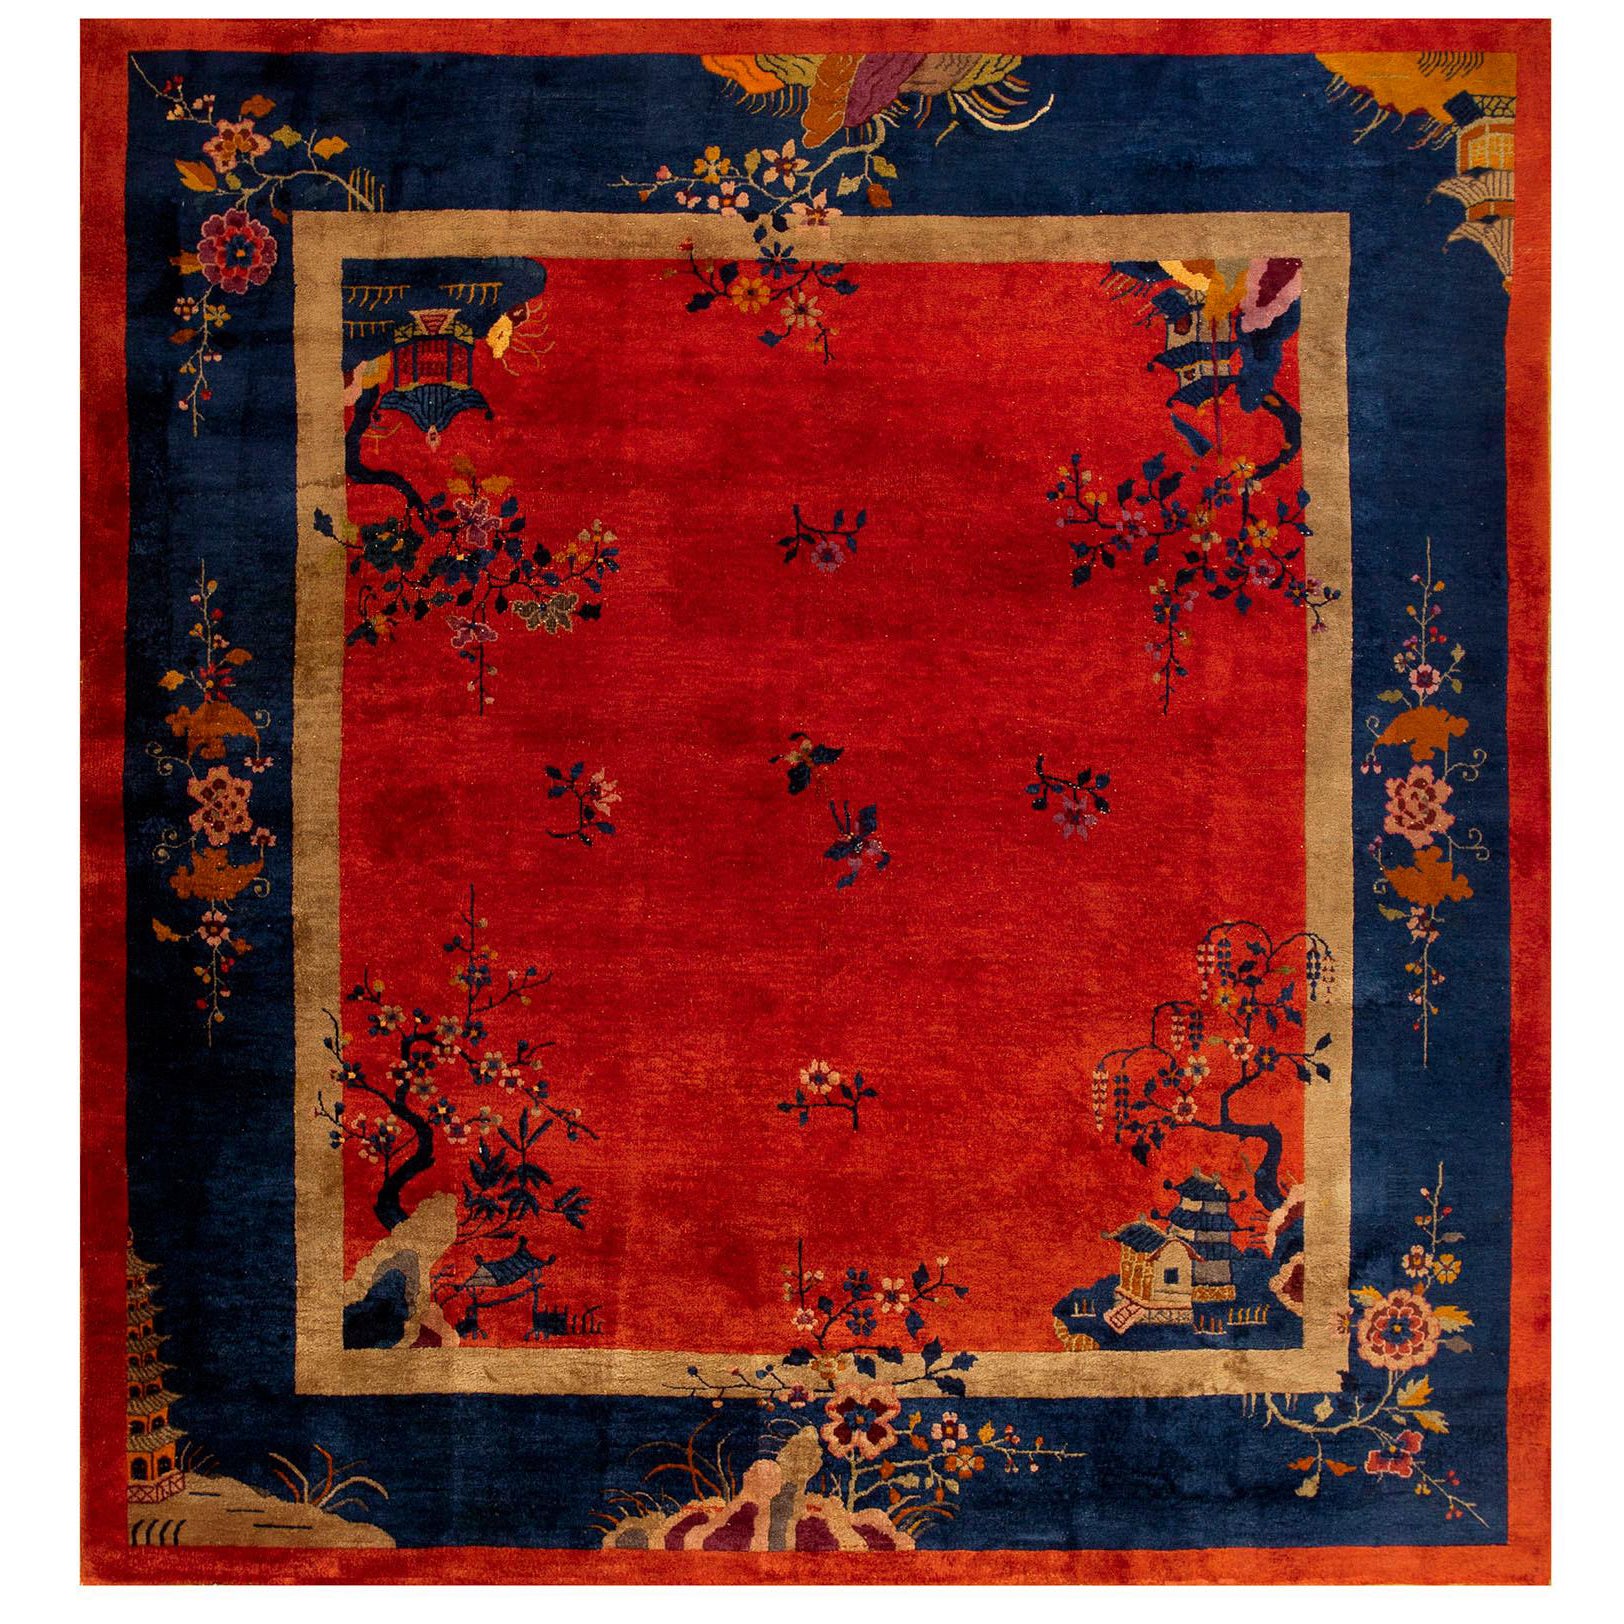 1920s Chinese Art Deco Carpet ( 9' x 9' 9'' - 275 x 297 cm )